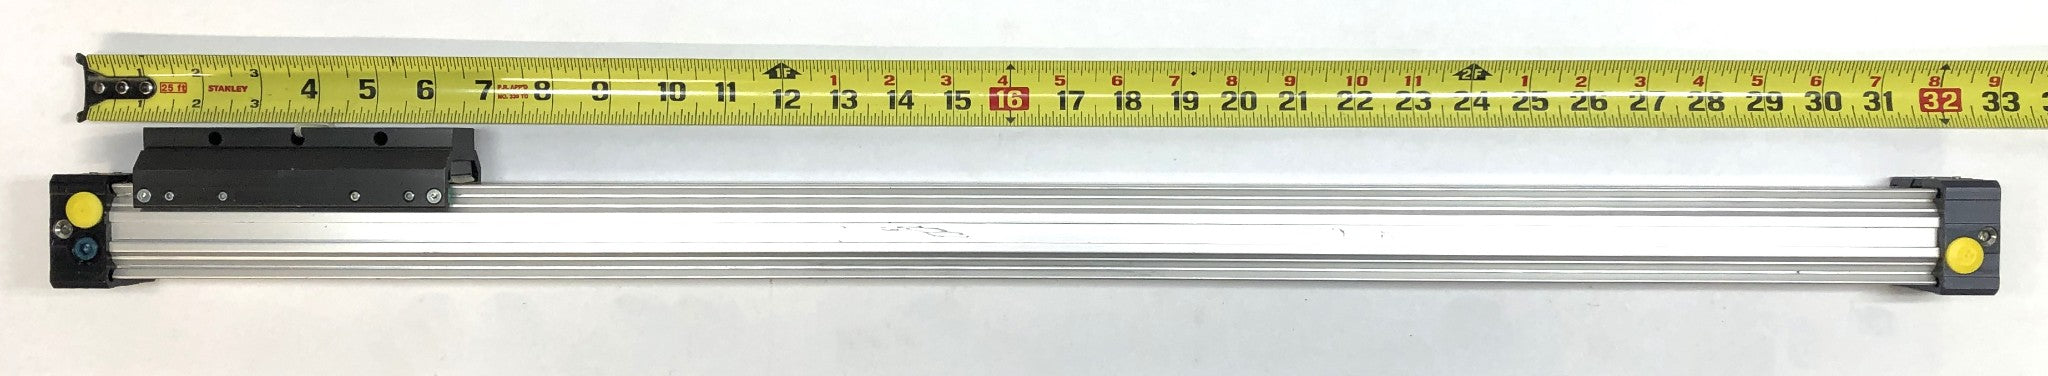 Norgren 25mm Bore-Guided Pneumatic Cylinder Slide C/46125/M/24 NOS